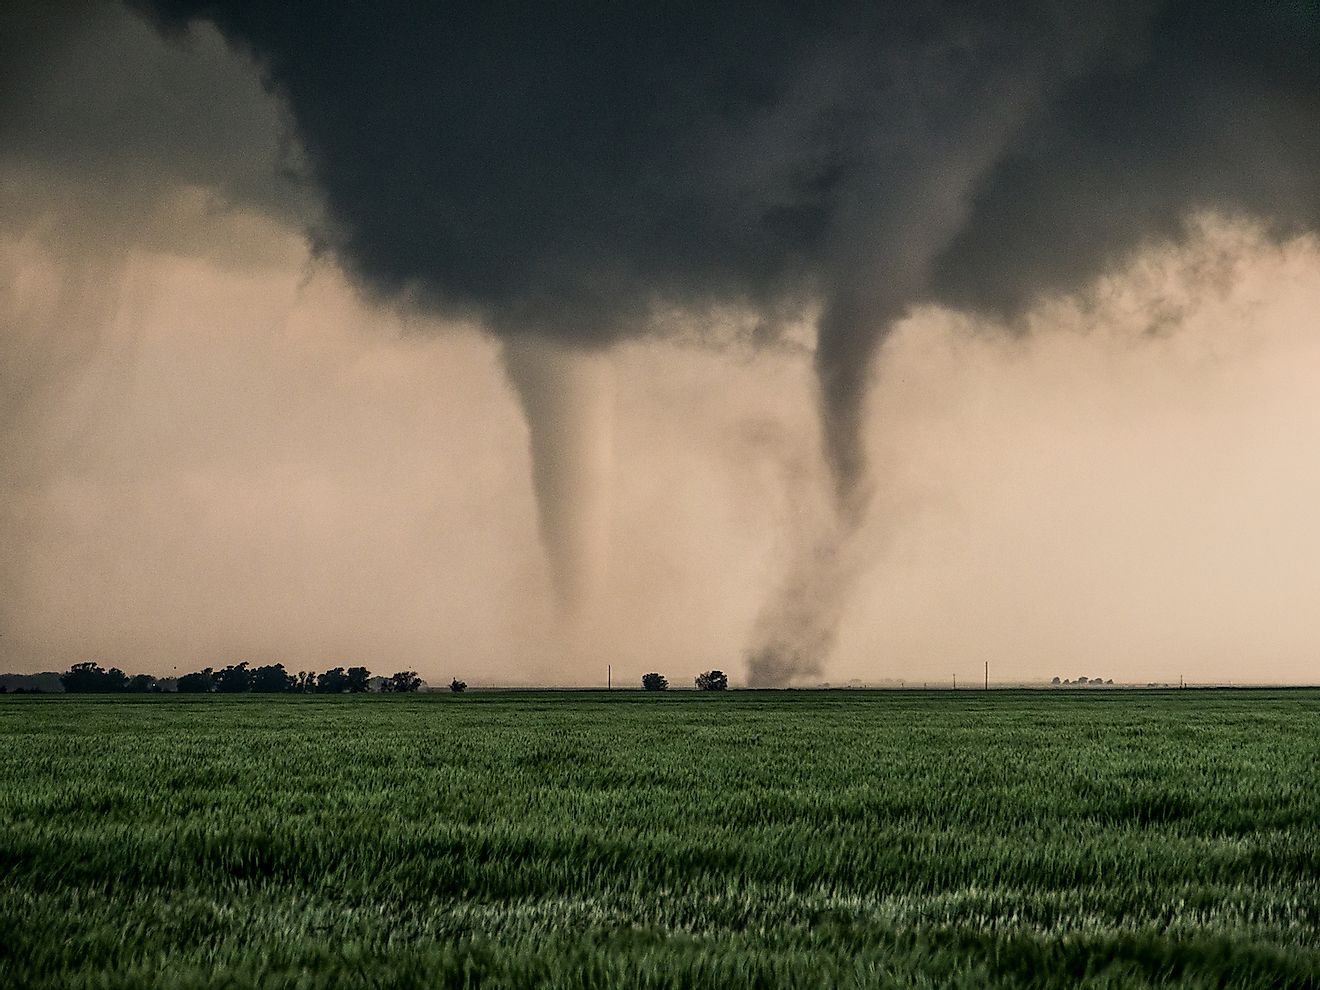 A pair of tornadoes take a destructive path through northern Oklahoma farmyards near Cherokee. Image credit: Eugene R Thieszen/Shutterstock.com